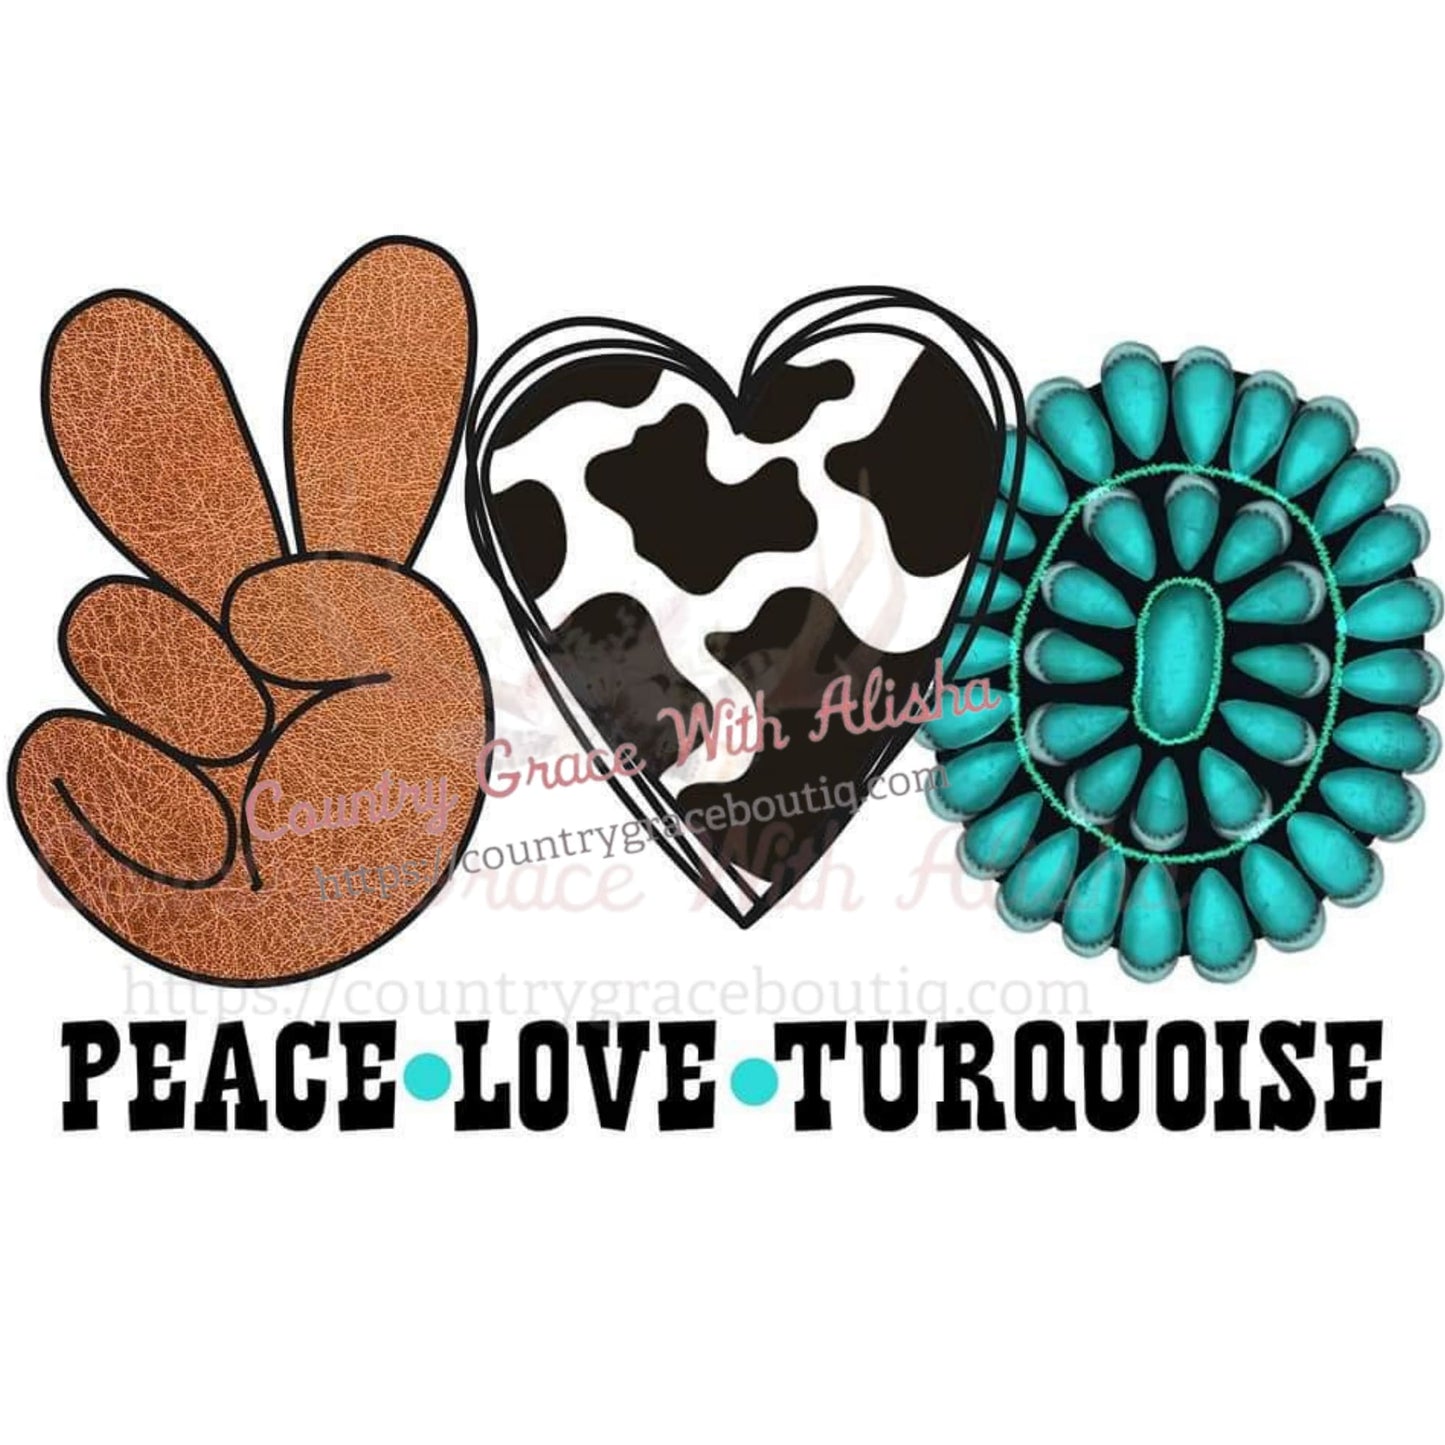 Peace Love Turquoise Sublimation Transfer - Sub $1.50 